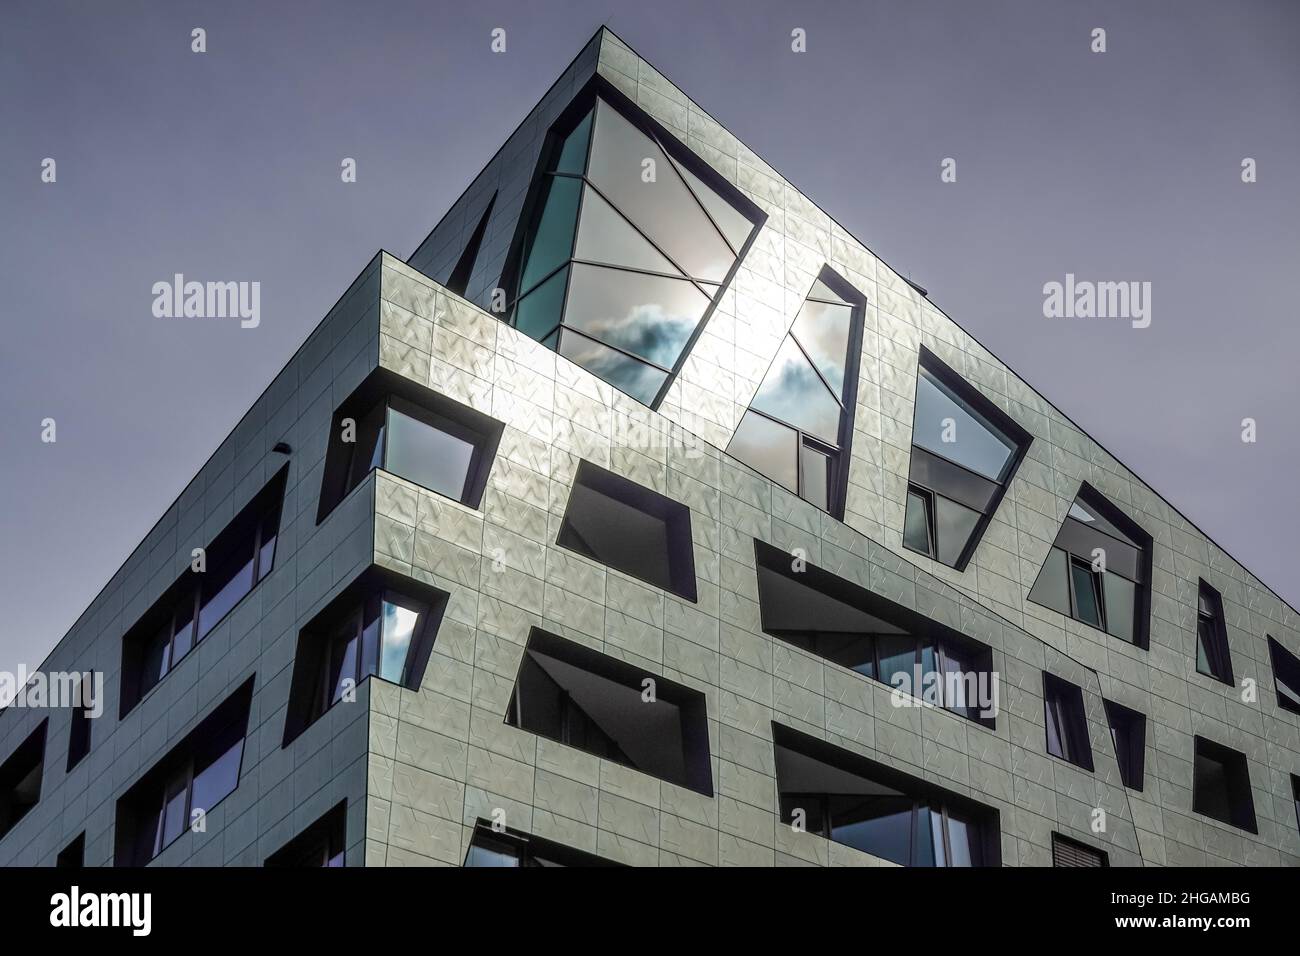 Nouveau bâtiment Sapphire par Daniel Libeskind, Chausseestrasse, Schwartzkopffstrasse, Mitte, Berlin,Allemagne Banque D'Images